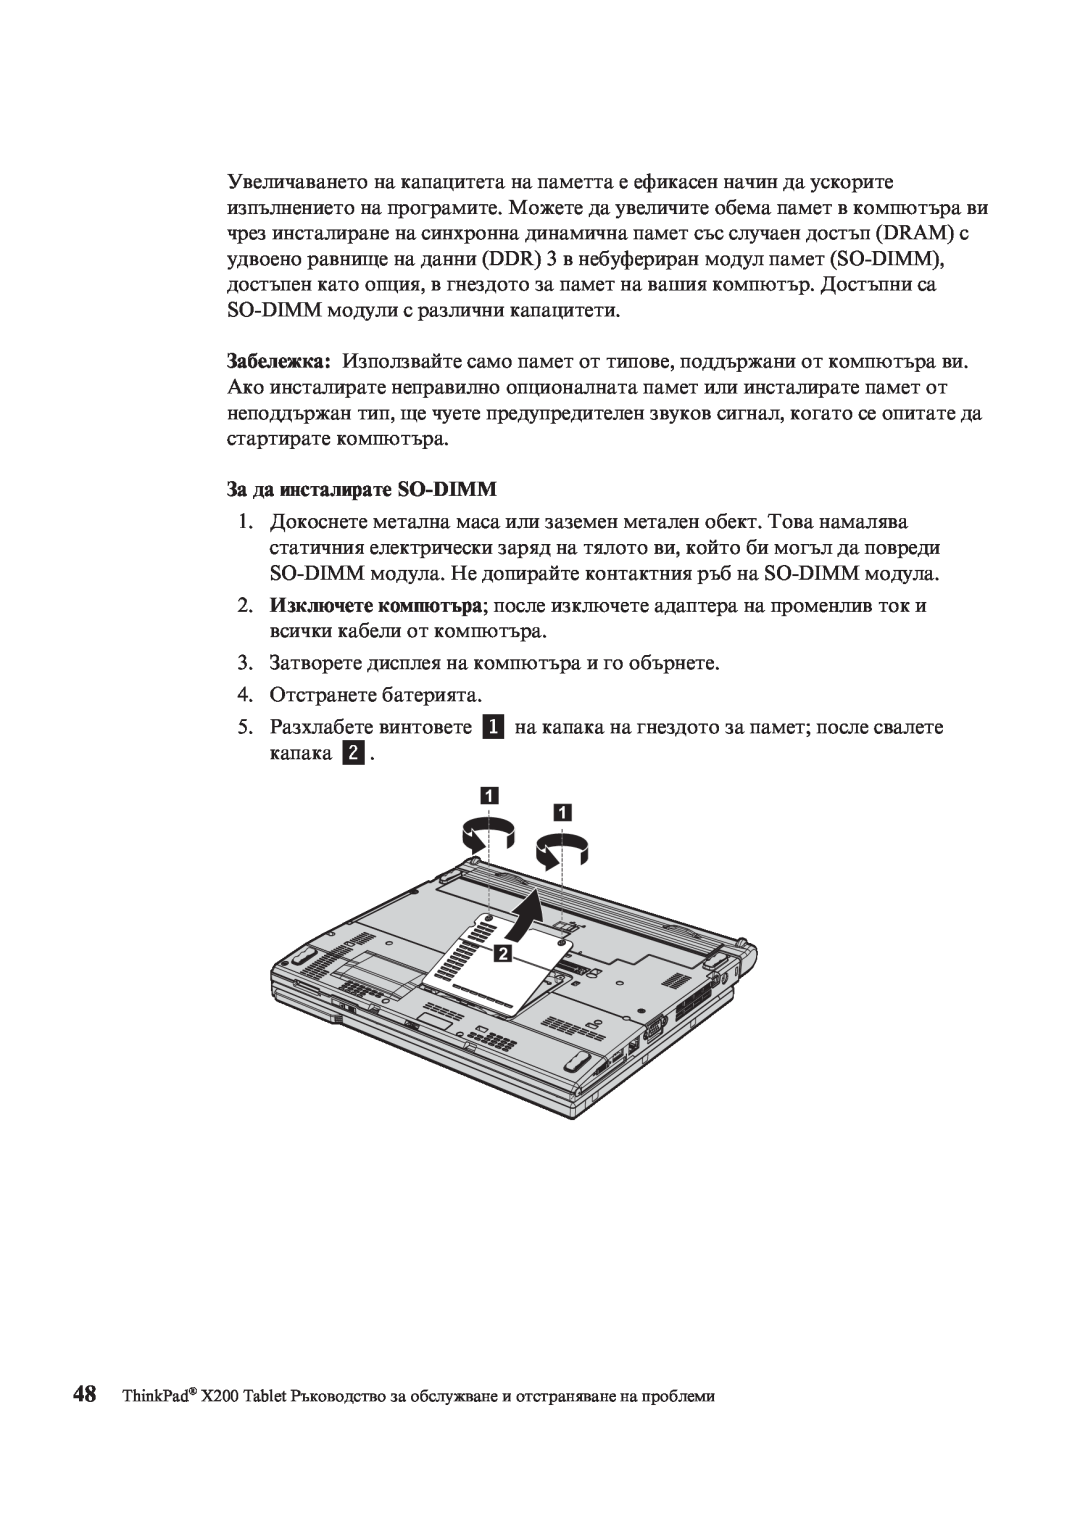 Lenovo X200 manual За да инсталирате SO-DIMM 